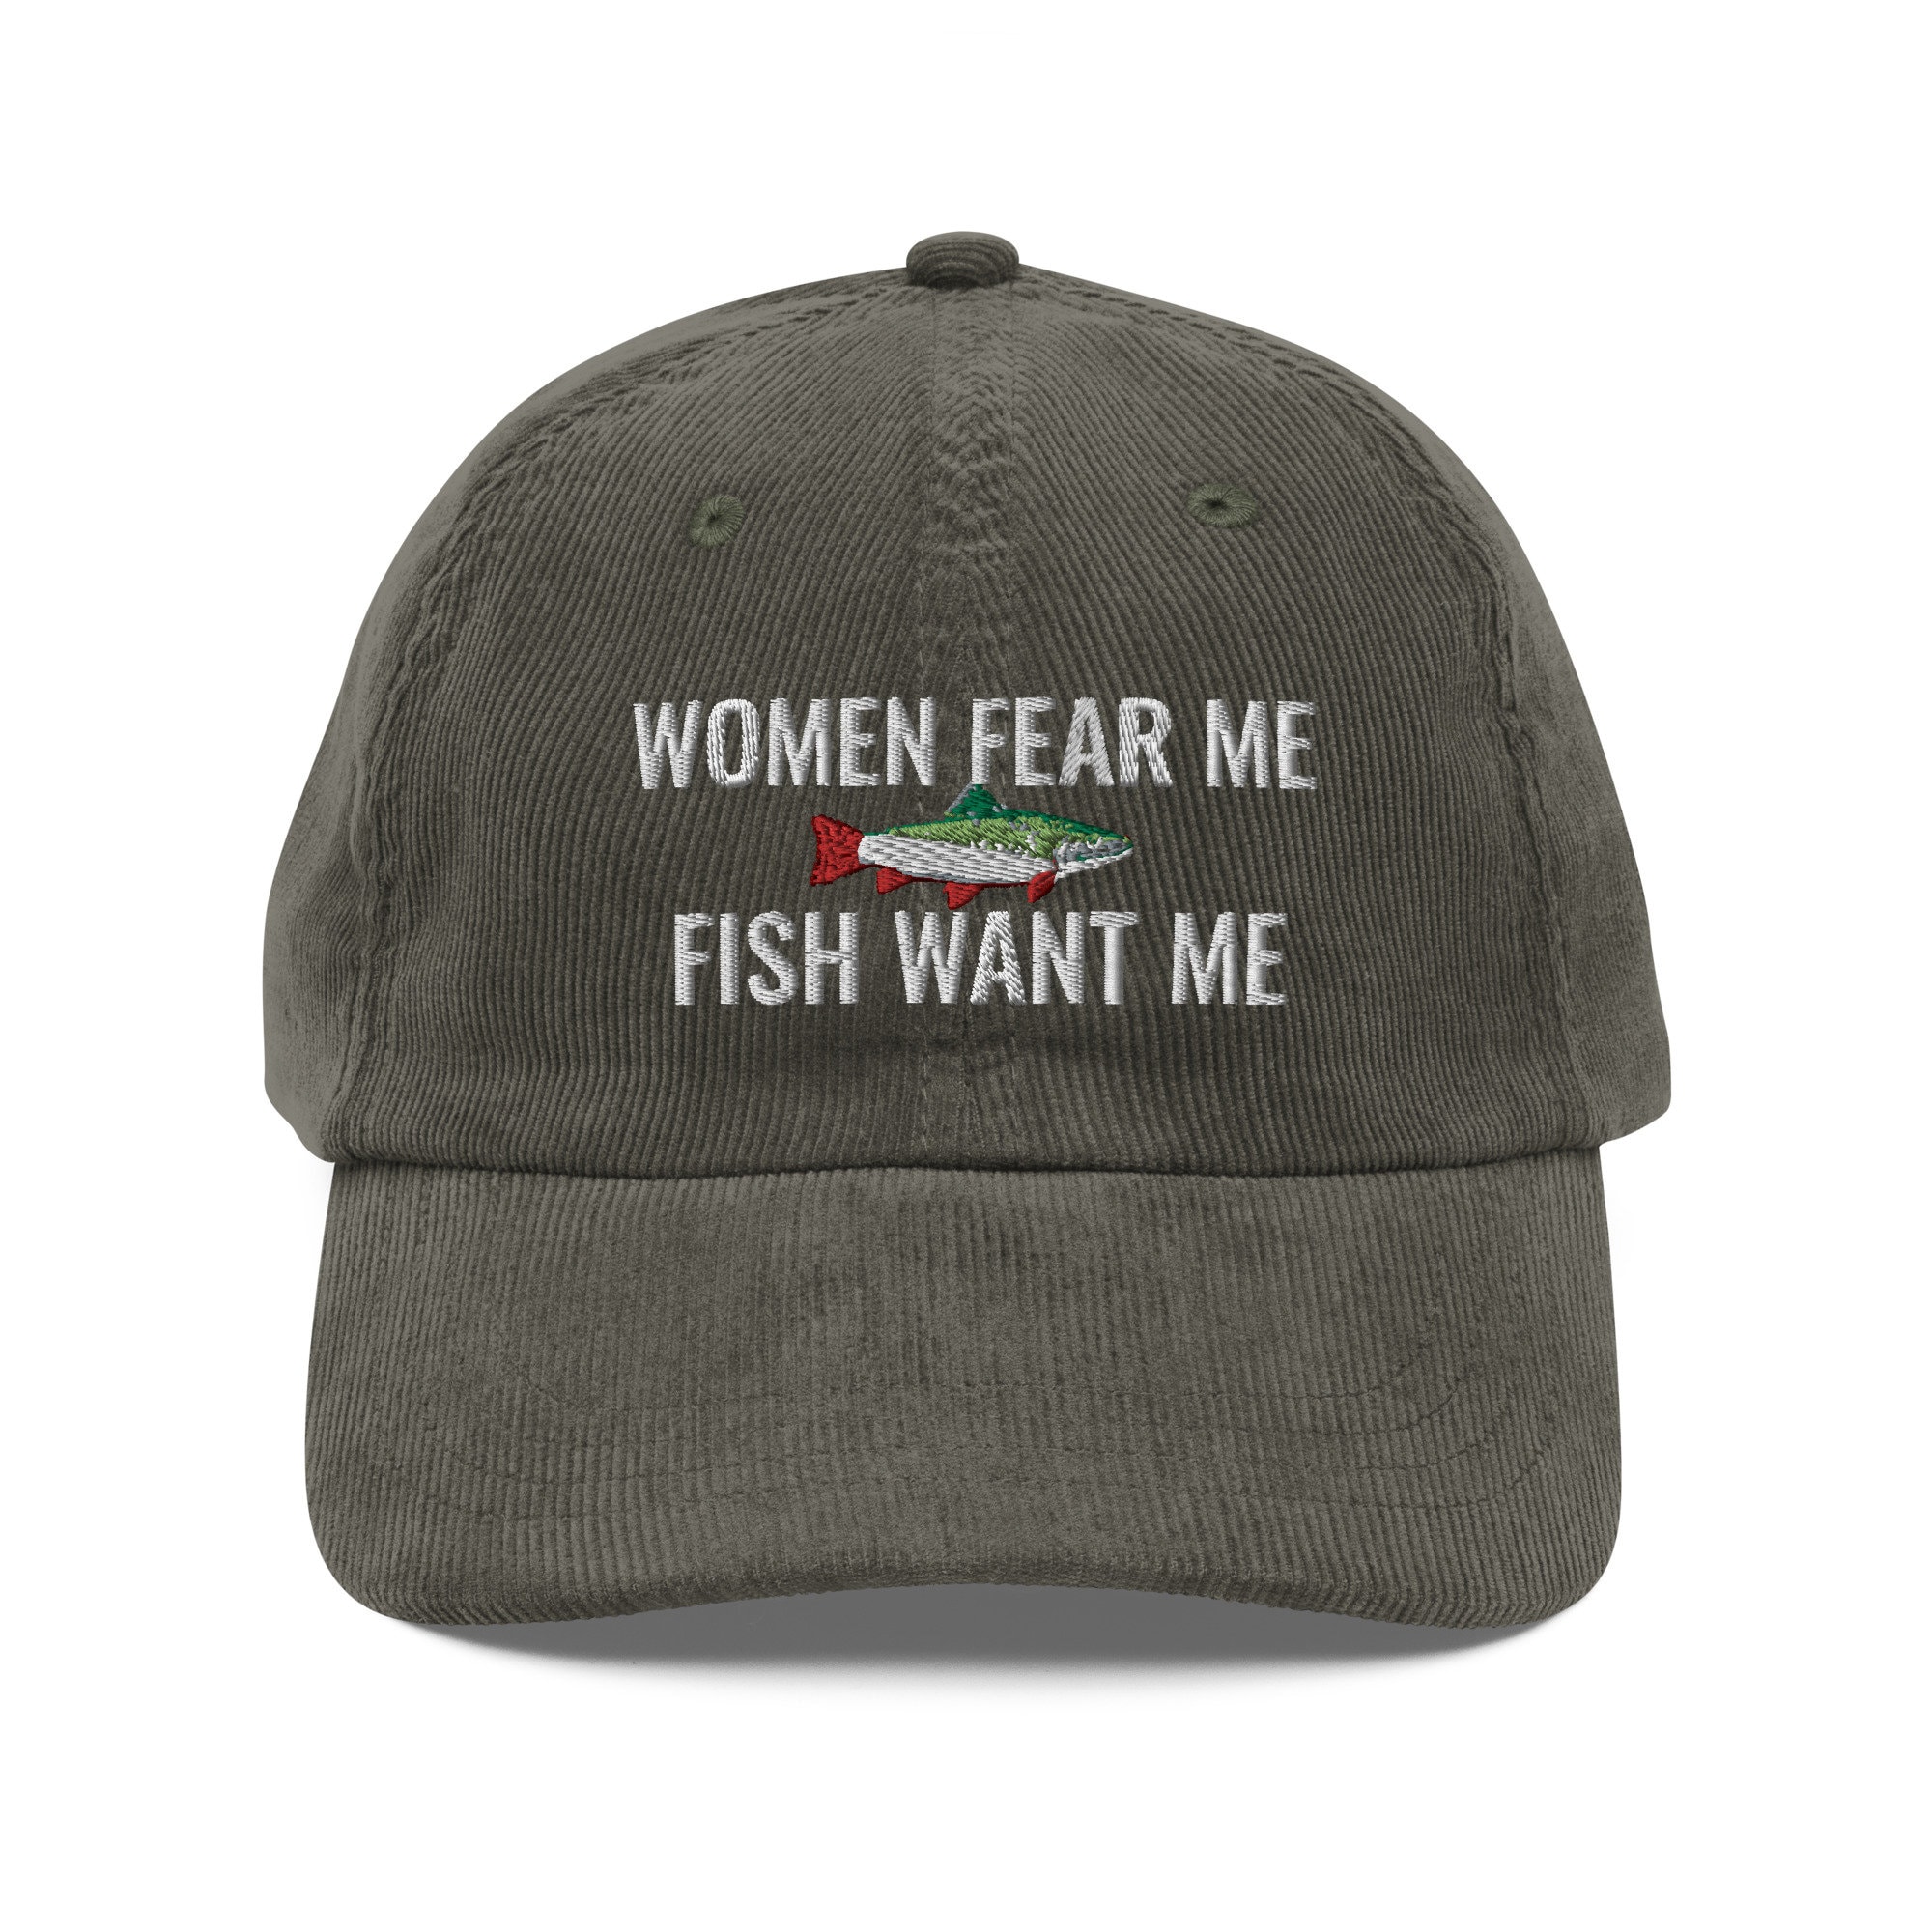 Fishing Hat Women Fear Me Fish Want Me Hat Embroidery Vintage Corduroy Cap  Fishing Gift, Salmon Fishing T Shirt Fisherman Nature Camping Hat 